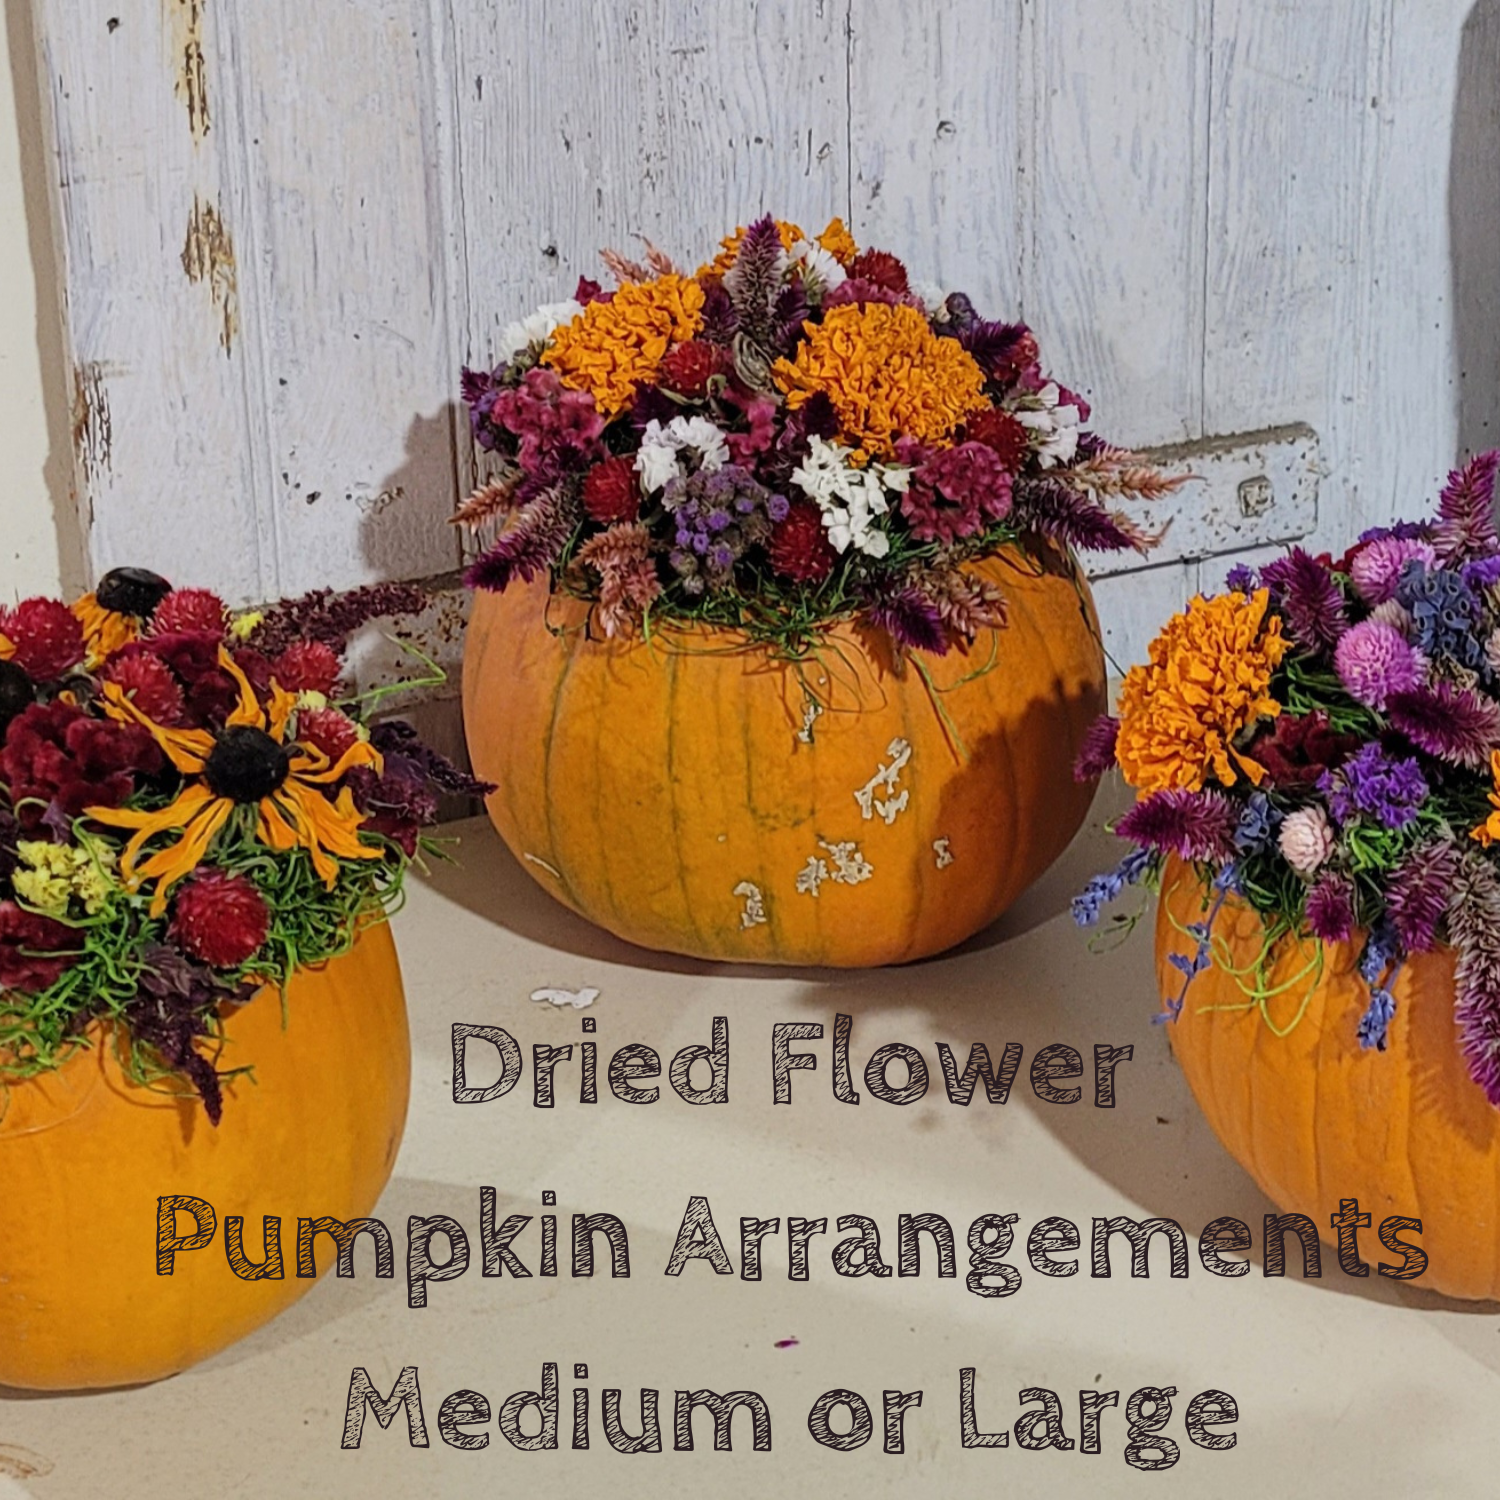 Next Happening: NEW!! Gorgeous Dried Flowers Pumpkin Arrangements + A NEW Breakfast Roll